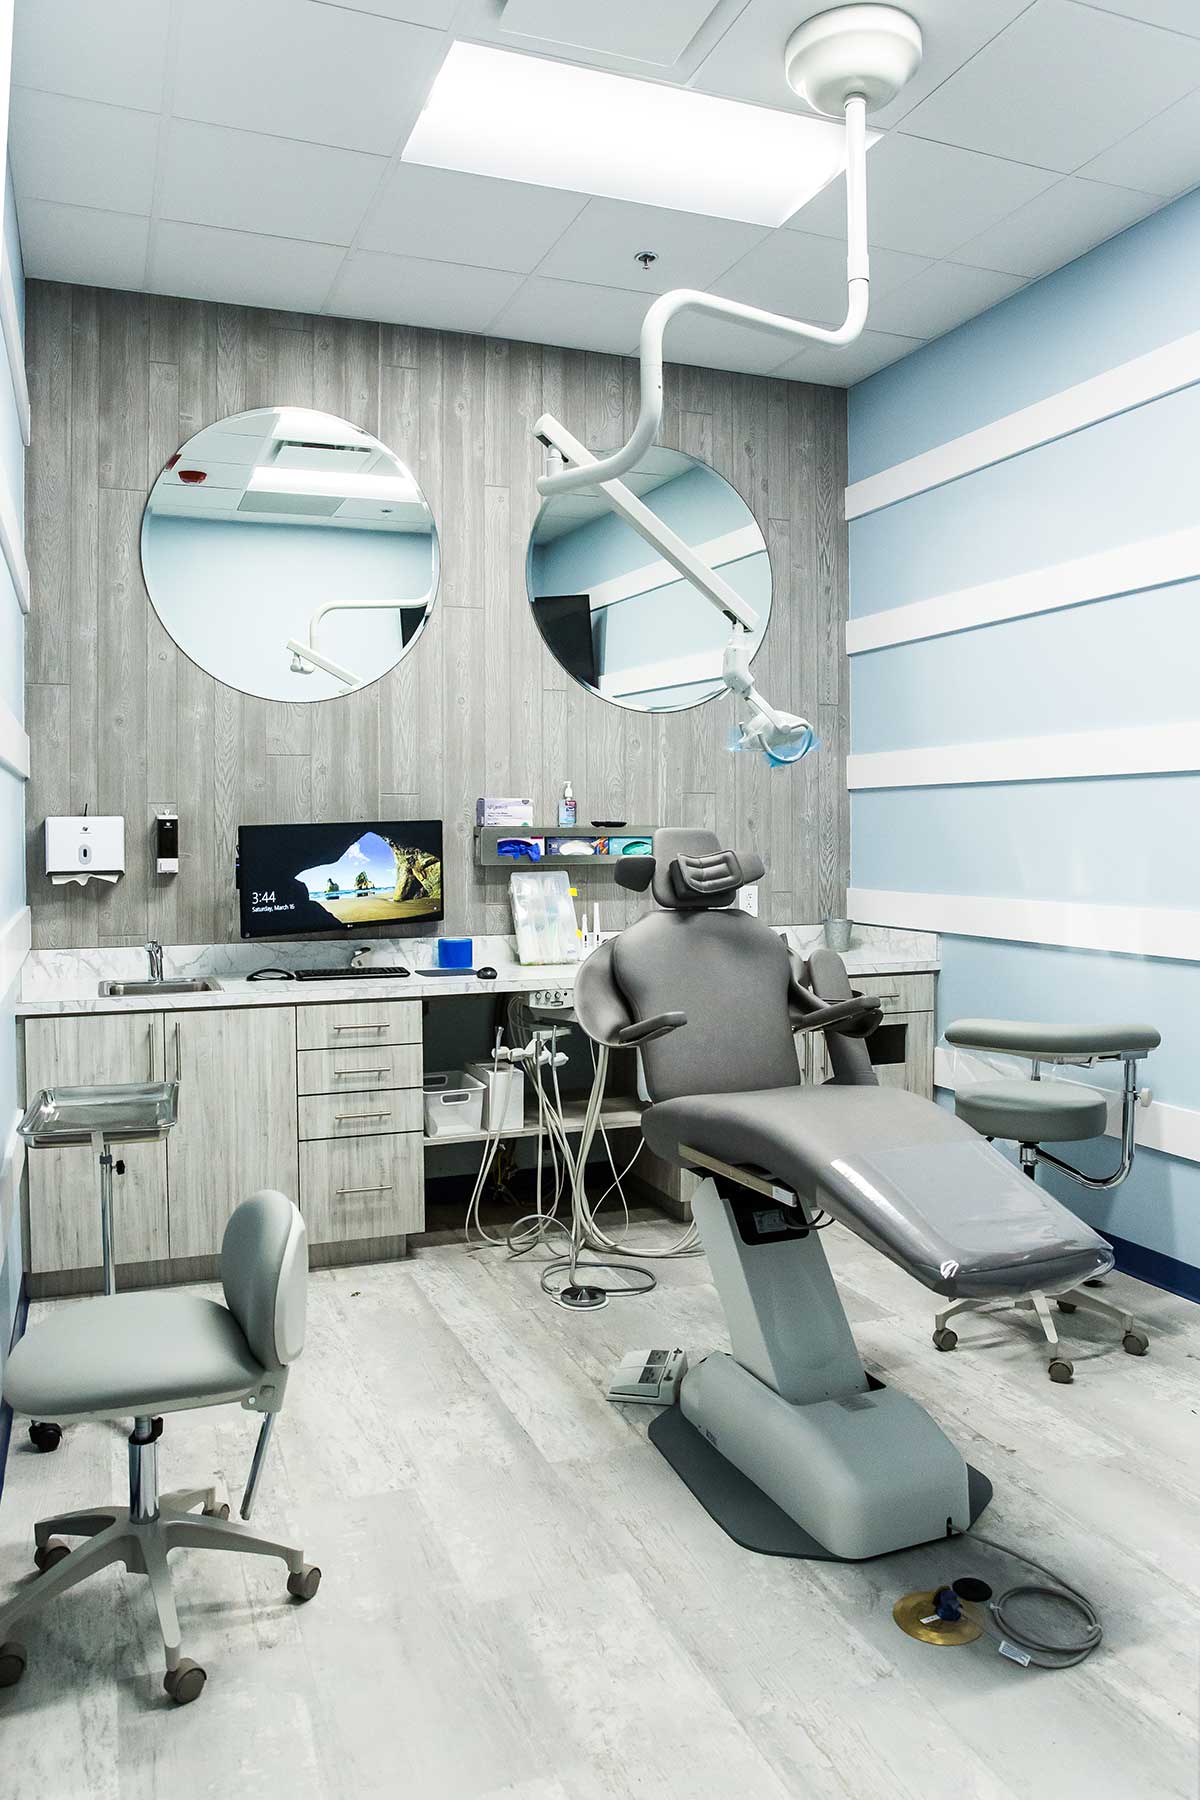 Dental chair in dental operatory